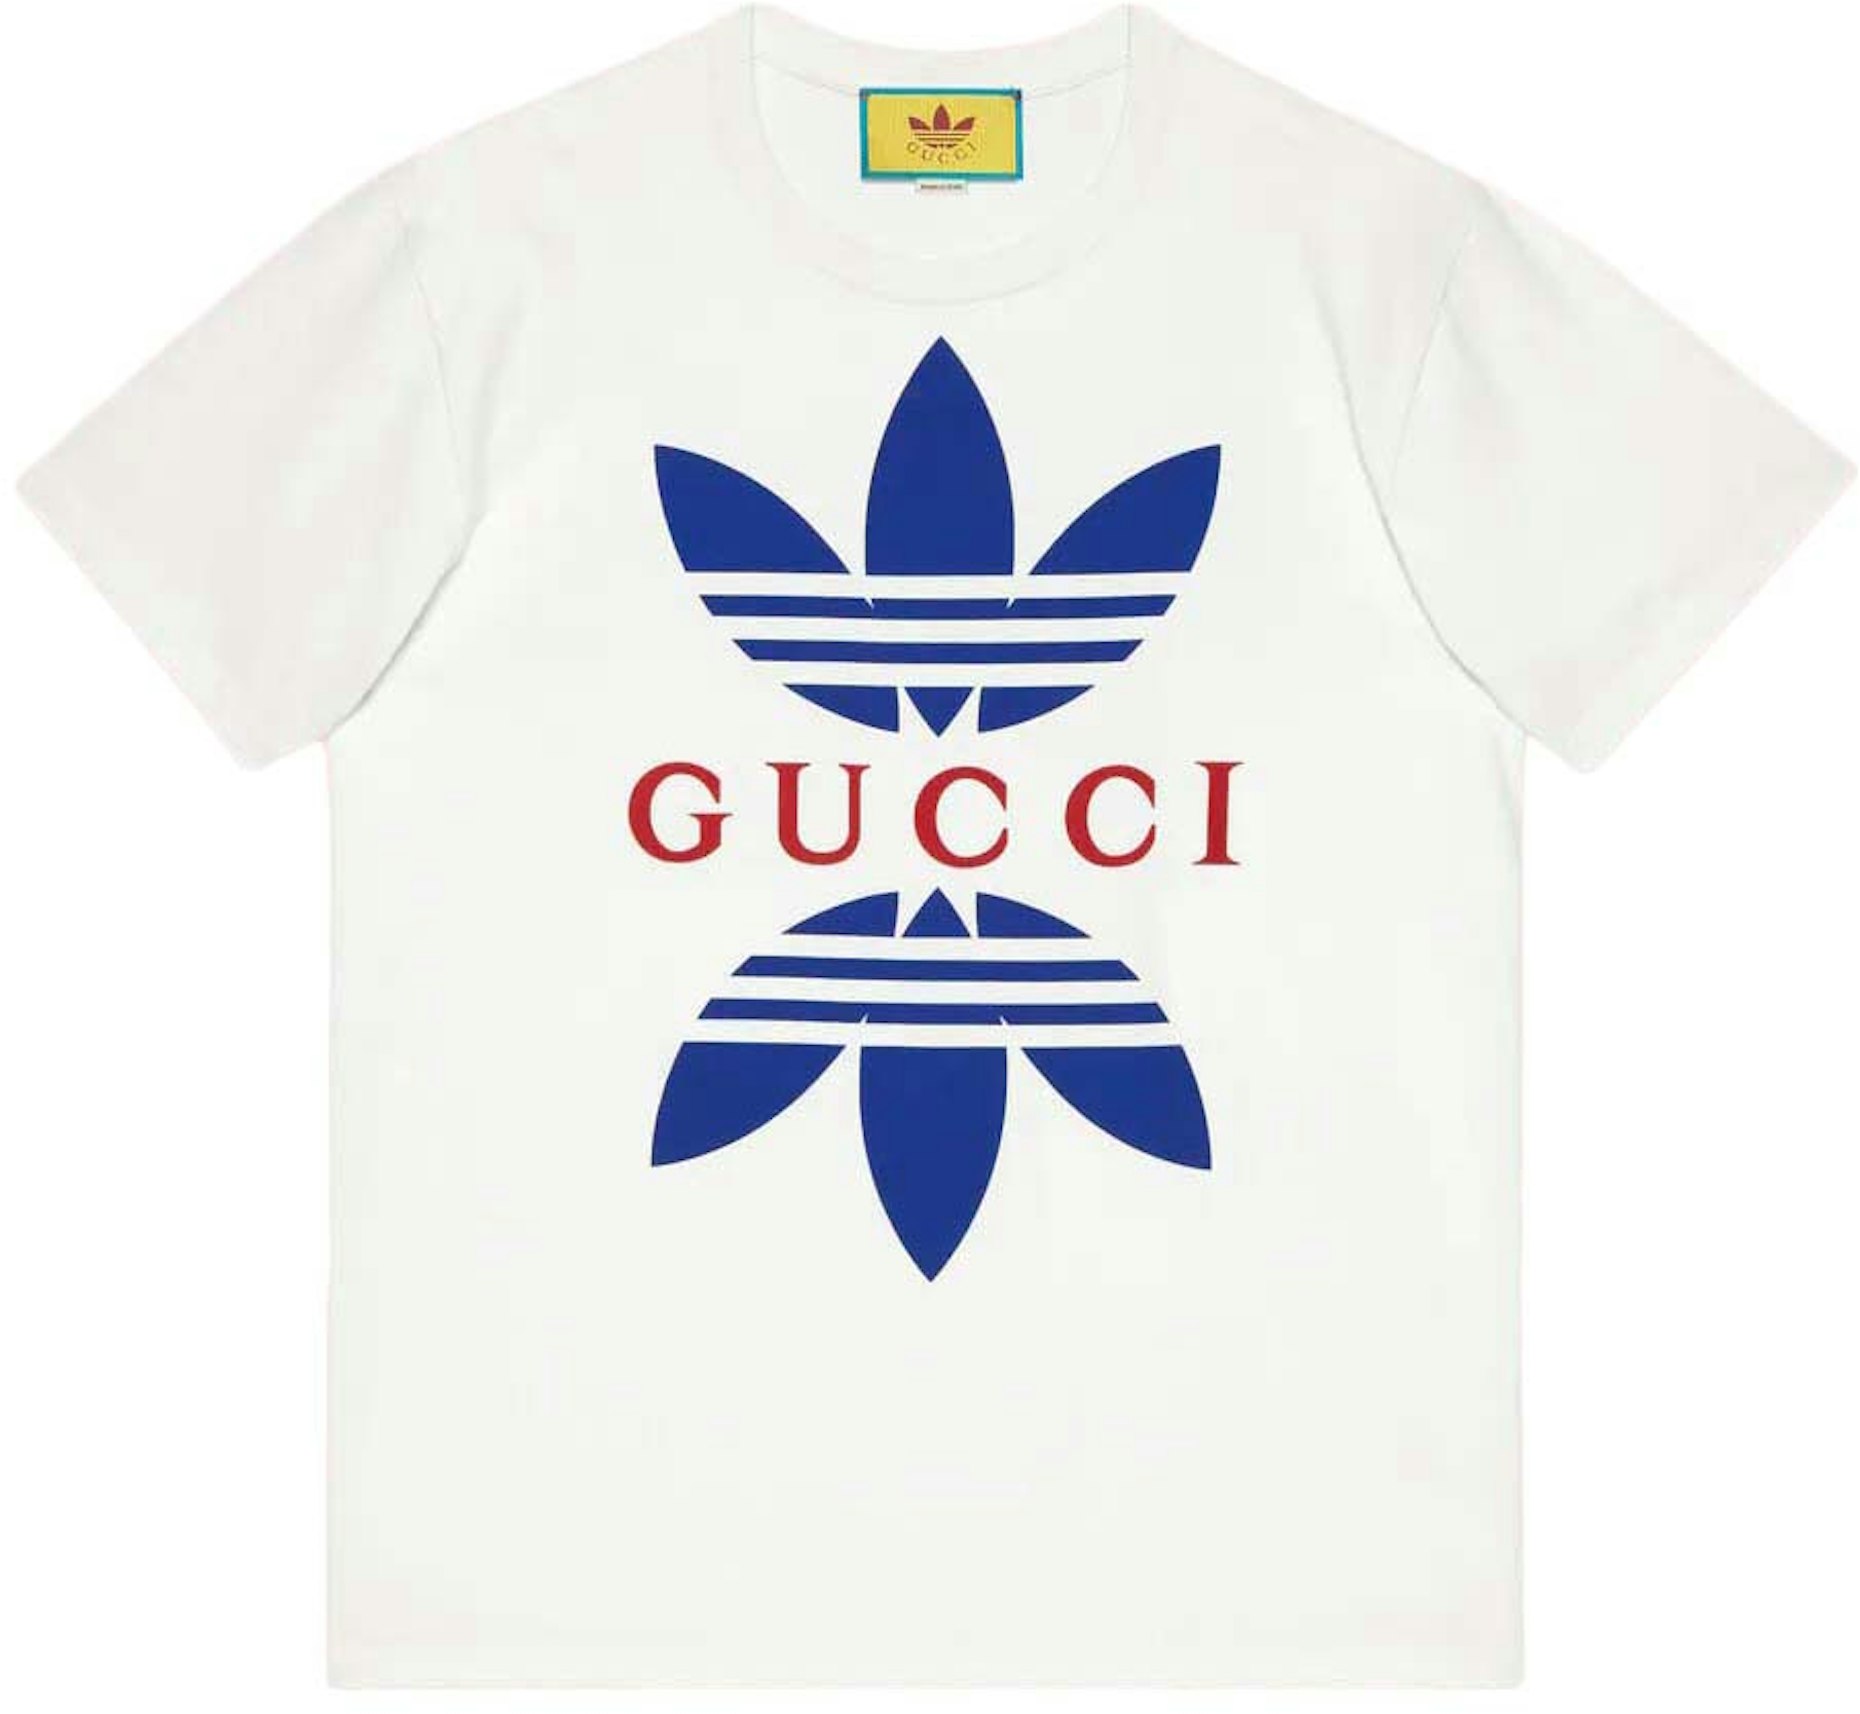 Gucci x adidas Cotton Jersey T-Shirt - SS22 Men's US